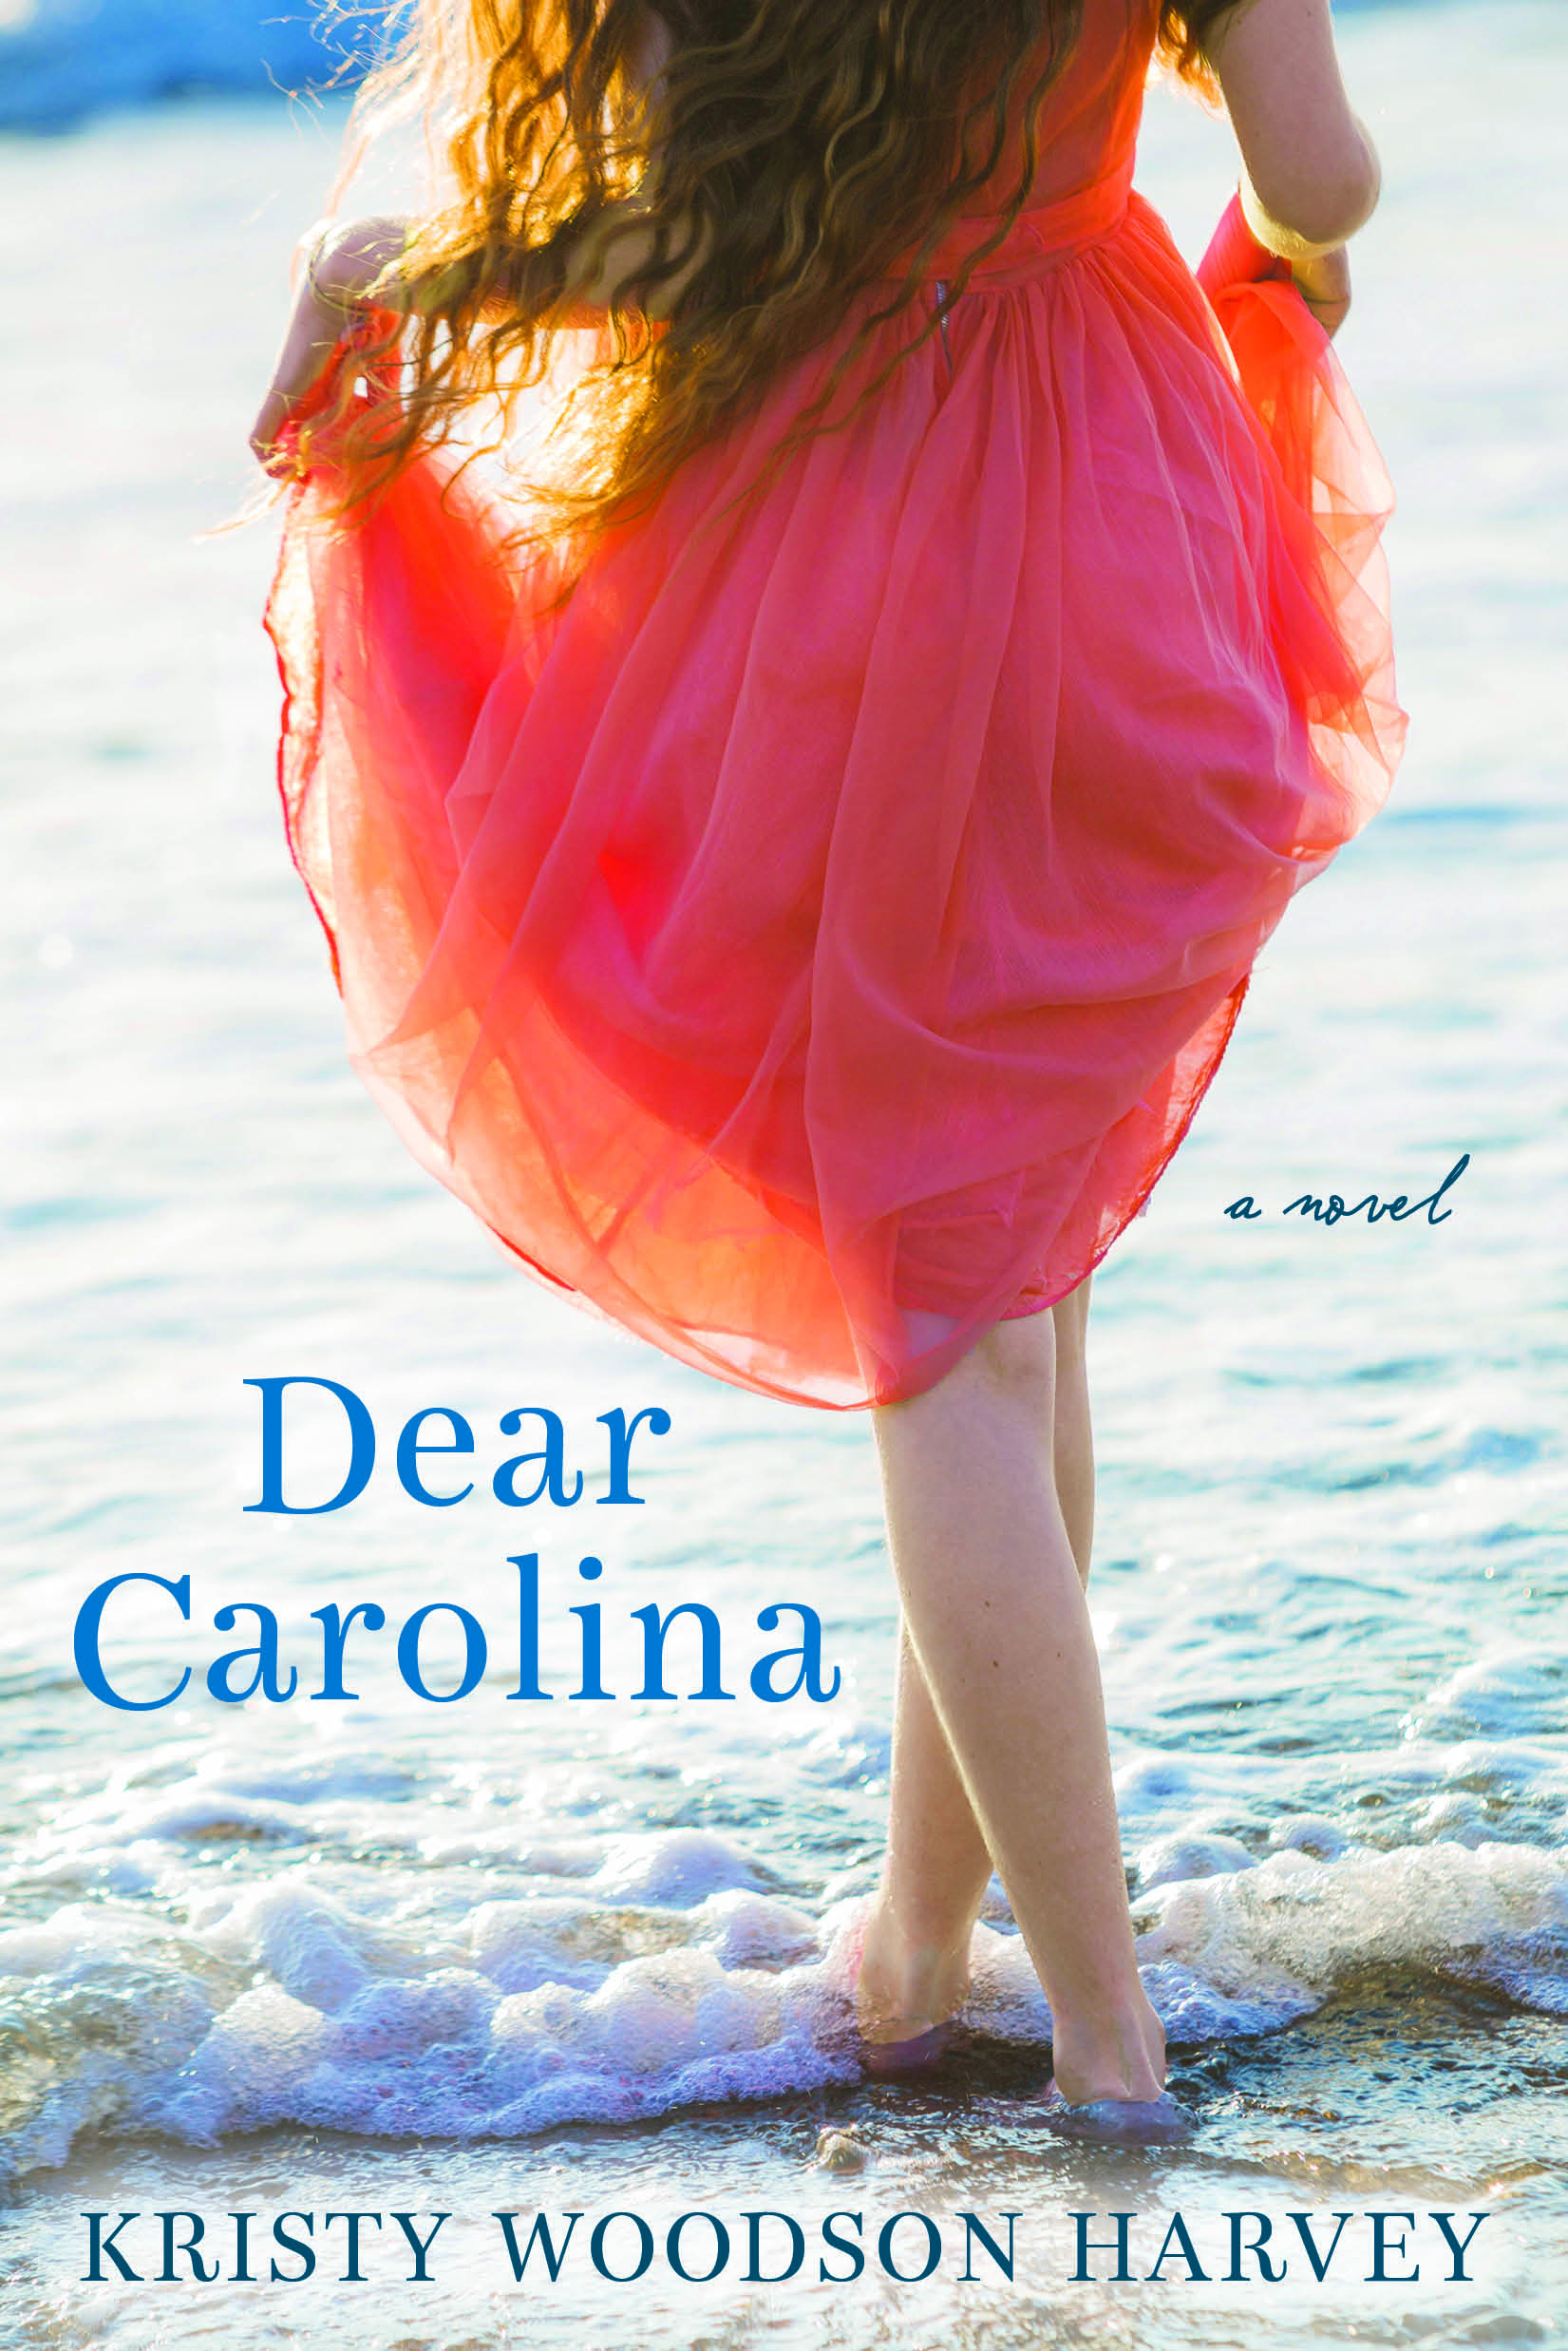 Dear Carolina by Kristy Woodson Harvey